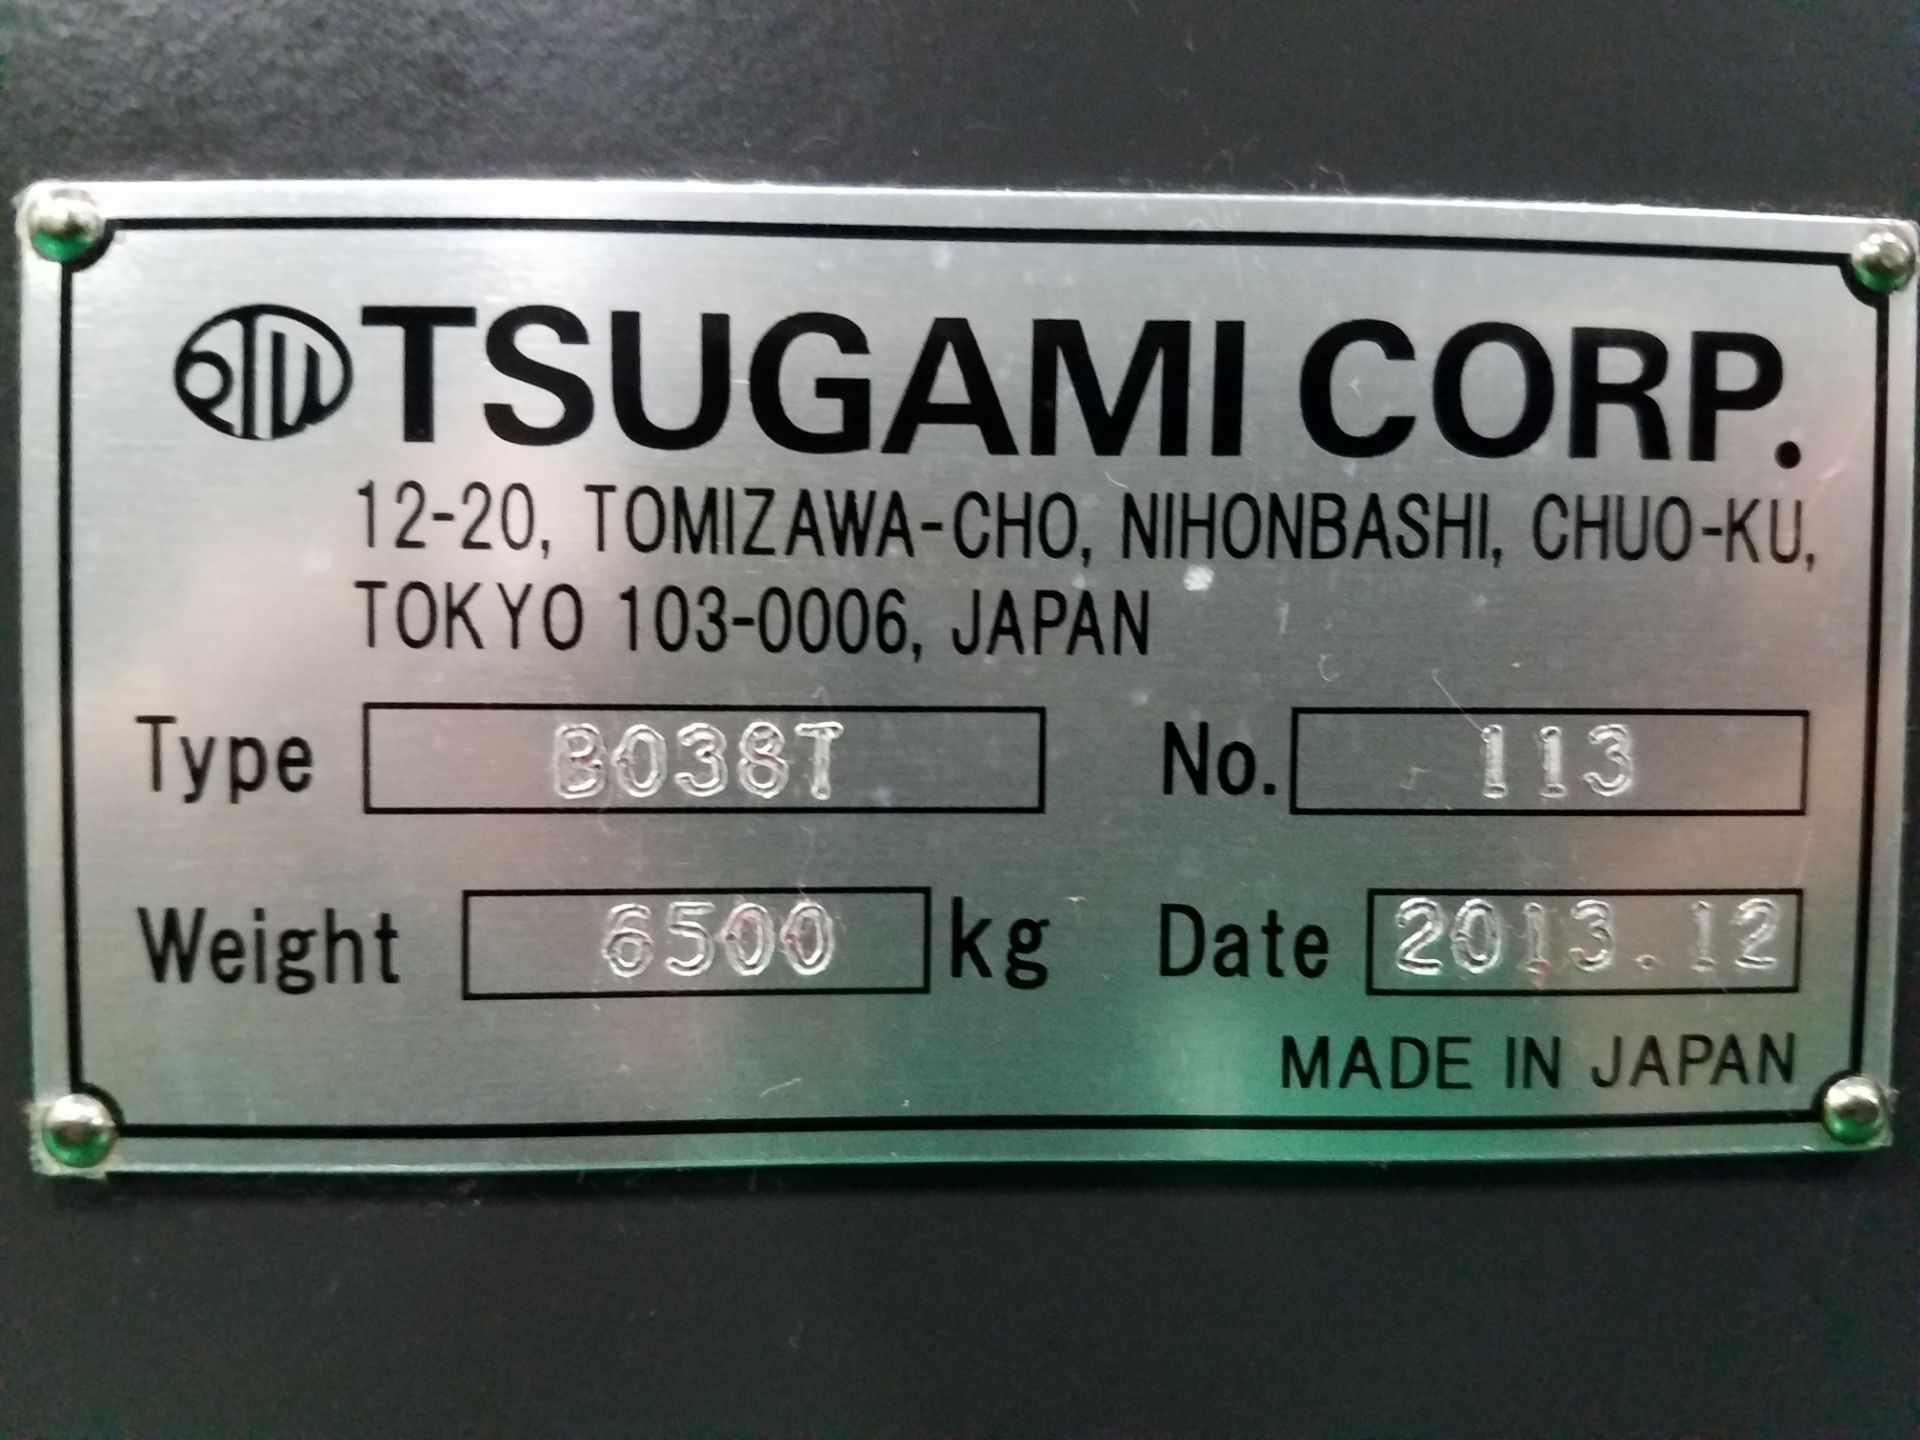 Tsugami ModelBO38T CNC Swiss Type Screw Machine, Turret Type, s/n 113, New 2013, Fanuc 32iT-B CNC - Image 2 of 3